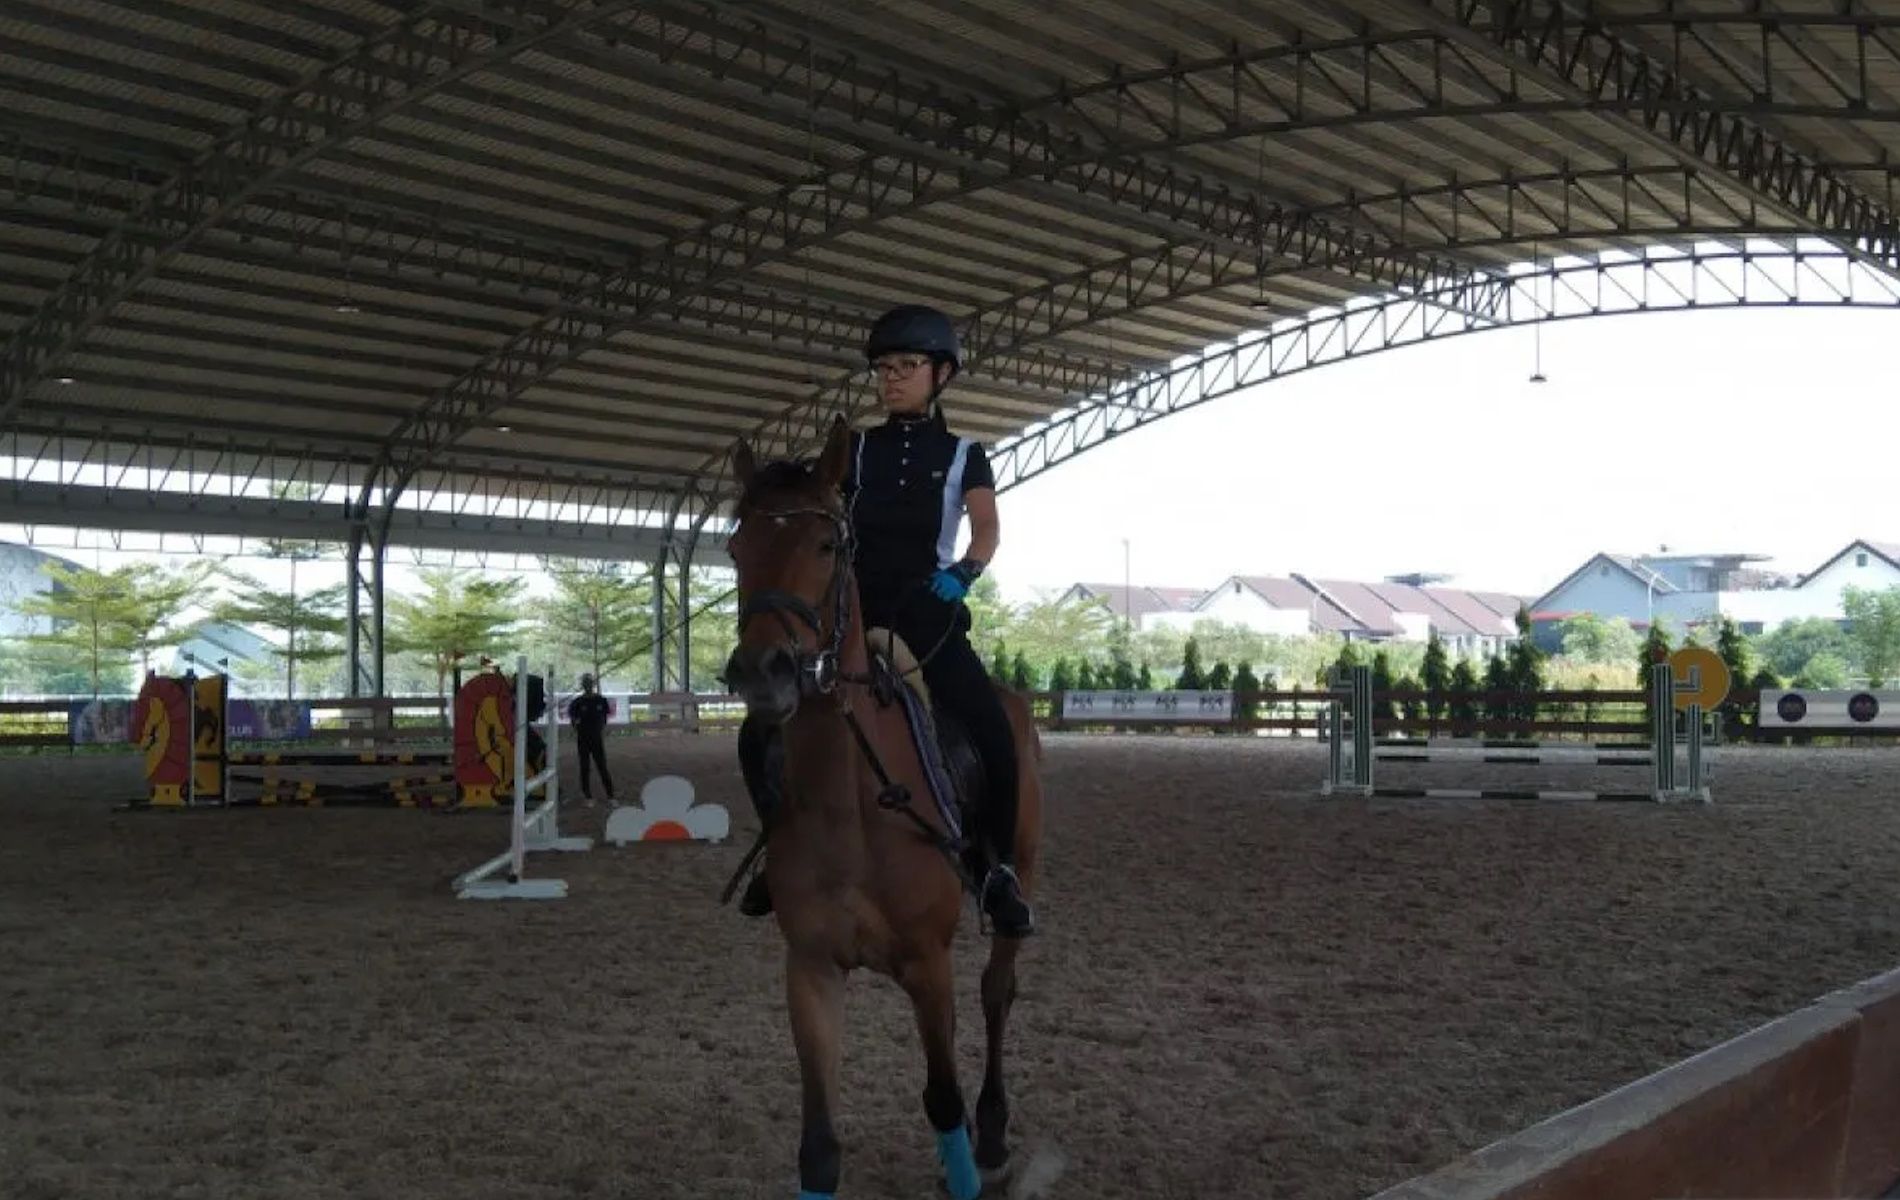 Pecinta olahraga berkuda menjalani sesi latihan di salah satu arena utama di Equinara yang berada di kawasan Jakarta International Equesterian Park (JIEP) Jakarta Timur.